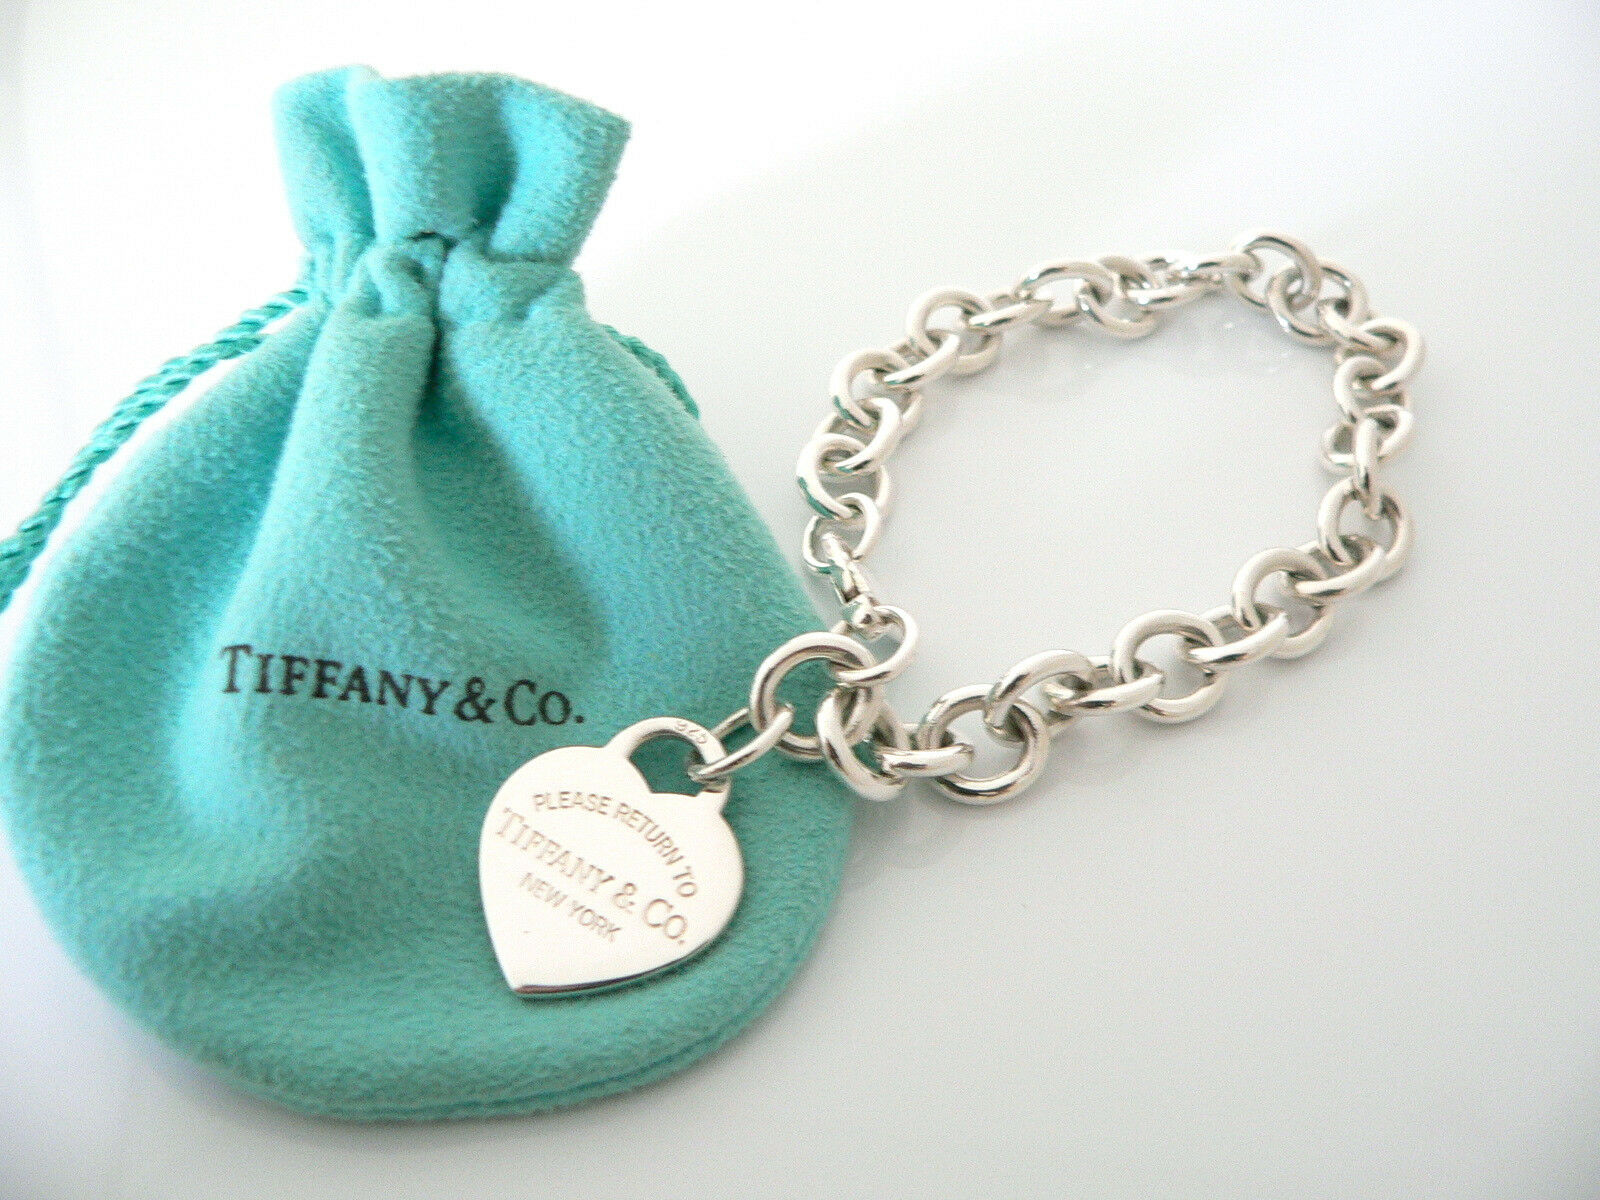 Tiffany & Co Heart Lock Bracelet - Elegant and Timeless